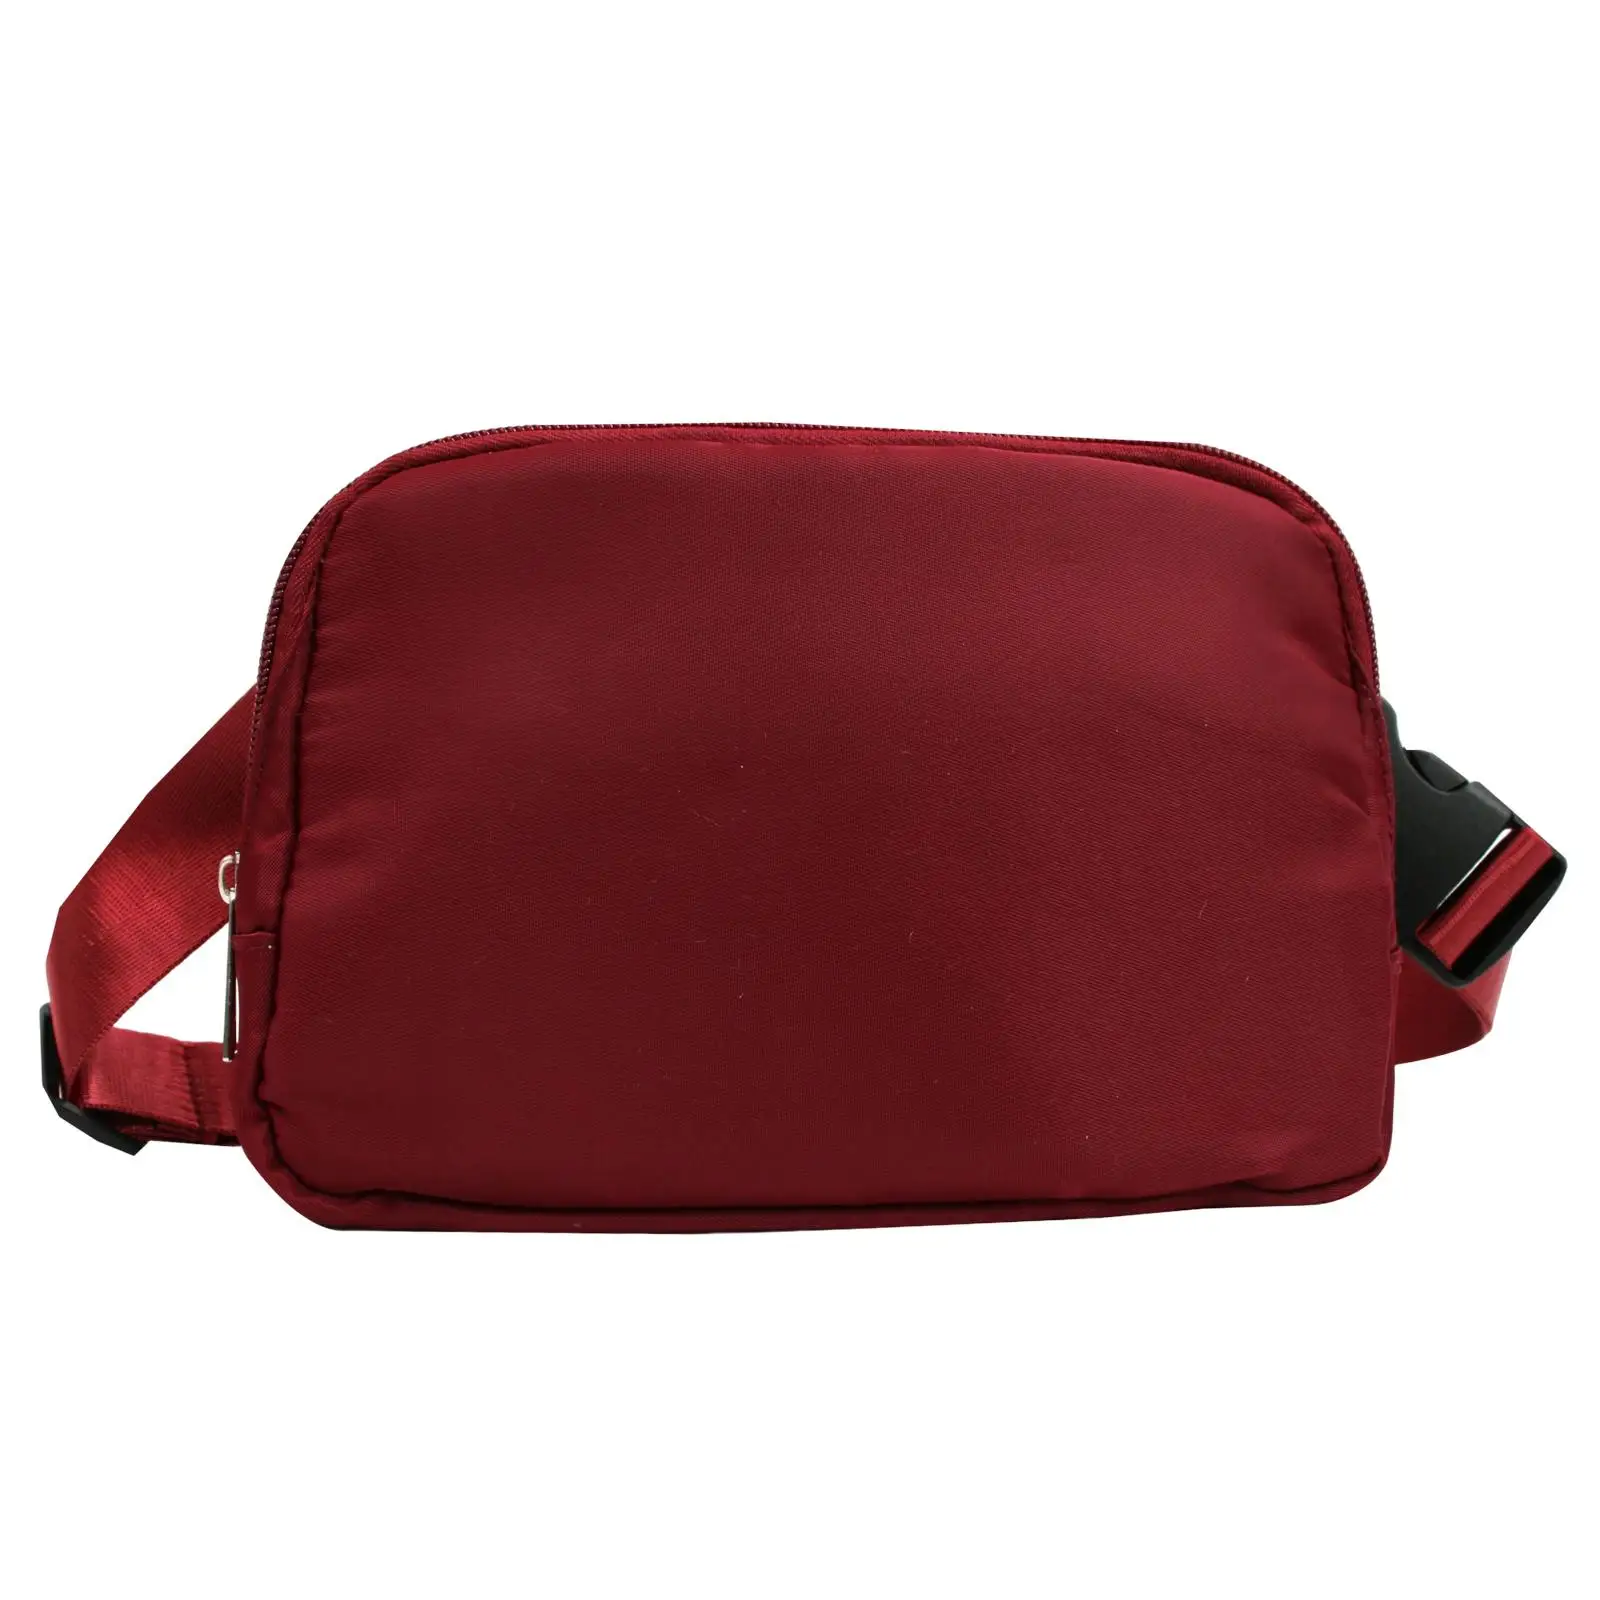 Waist Bag Chest Bag Adjustable Strap Belt Bag Tote Fanny Pack Phone Key Holder for Walking Camping Leisure Flashlight Sports